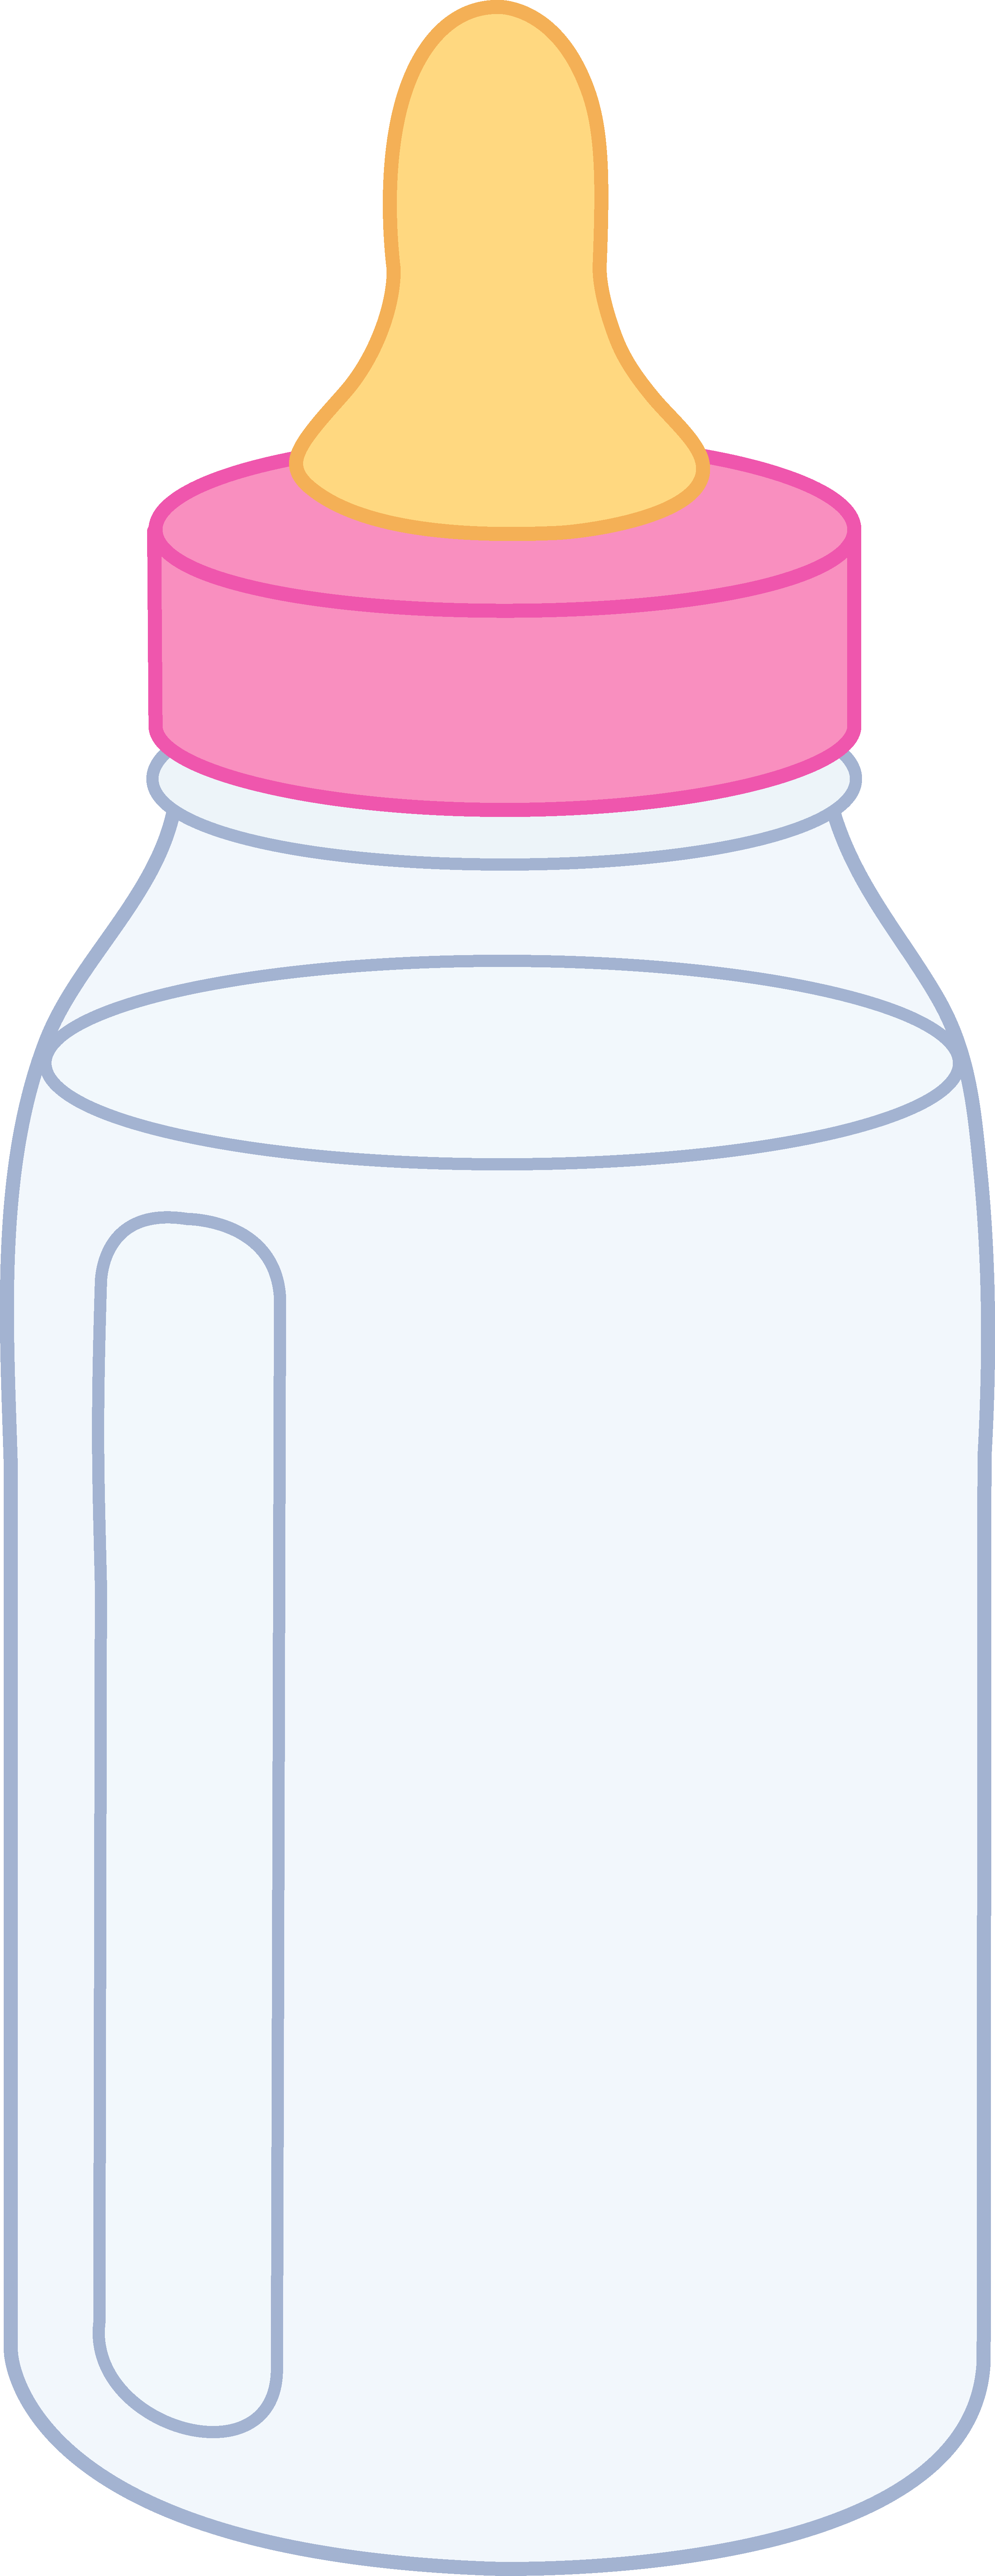 Infant clipart baby milk bottle, Infant baby milk bottle Transparent